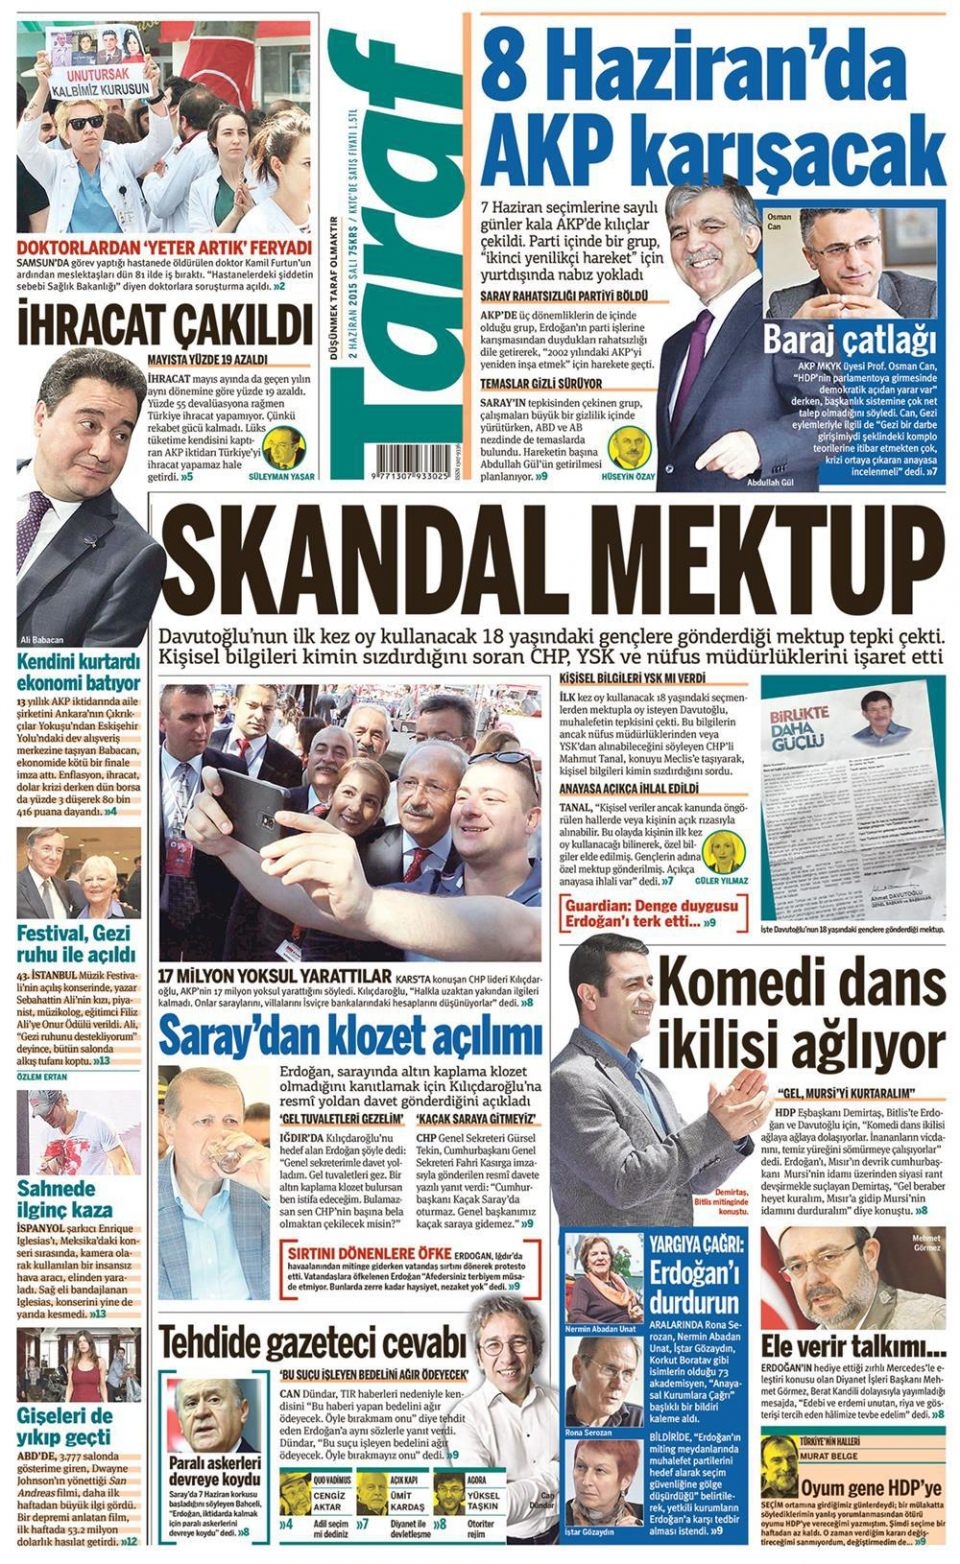 2 Haziran 2015 gazete manşetleri 24